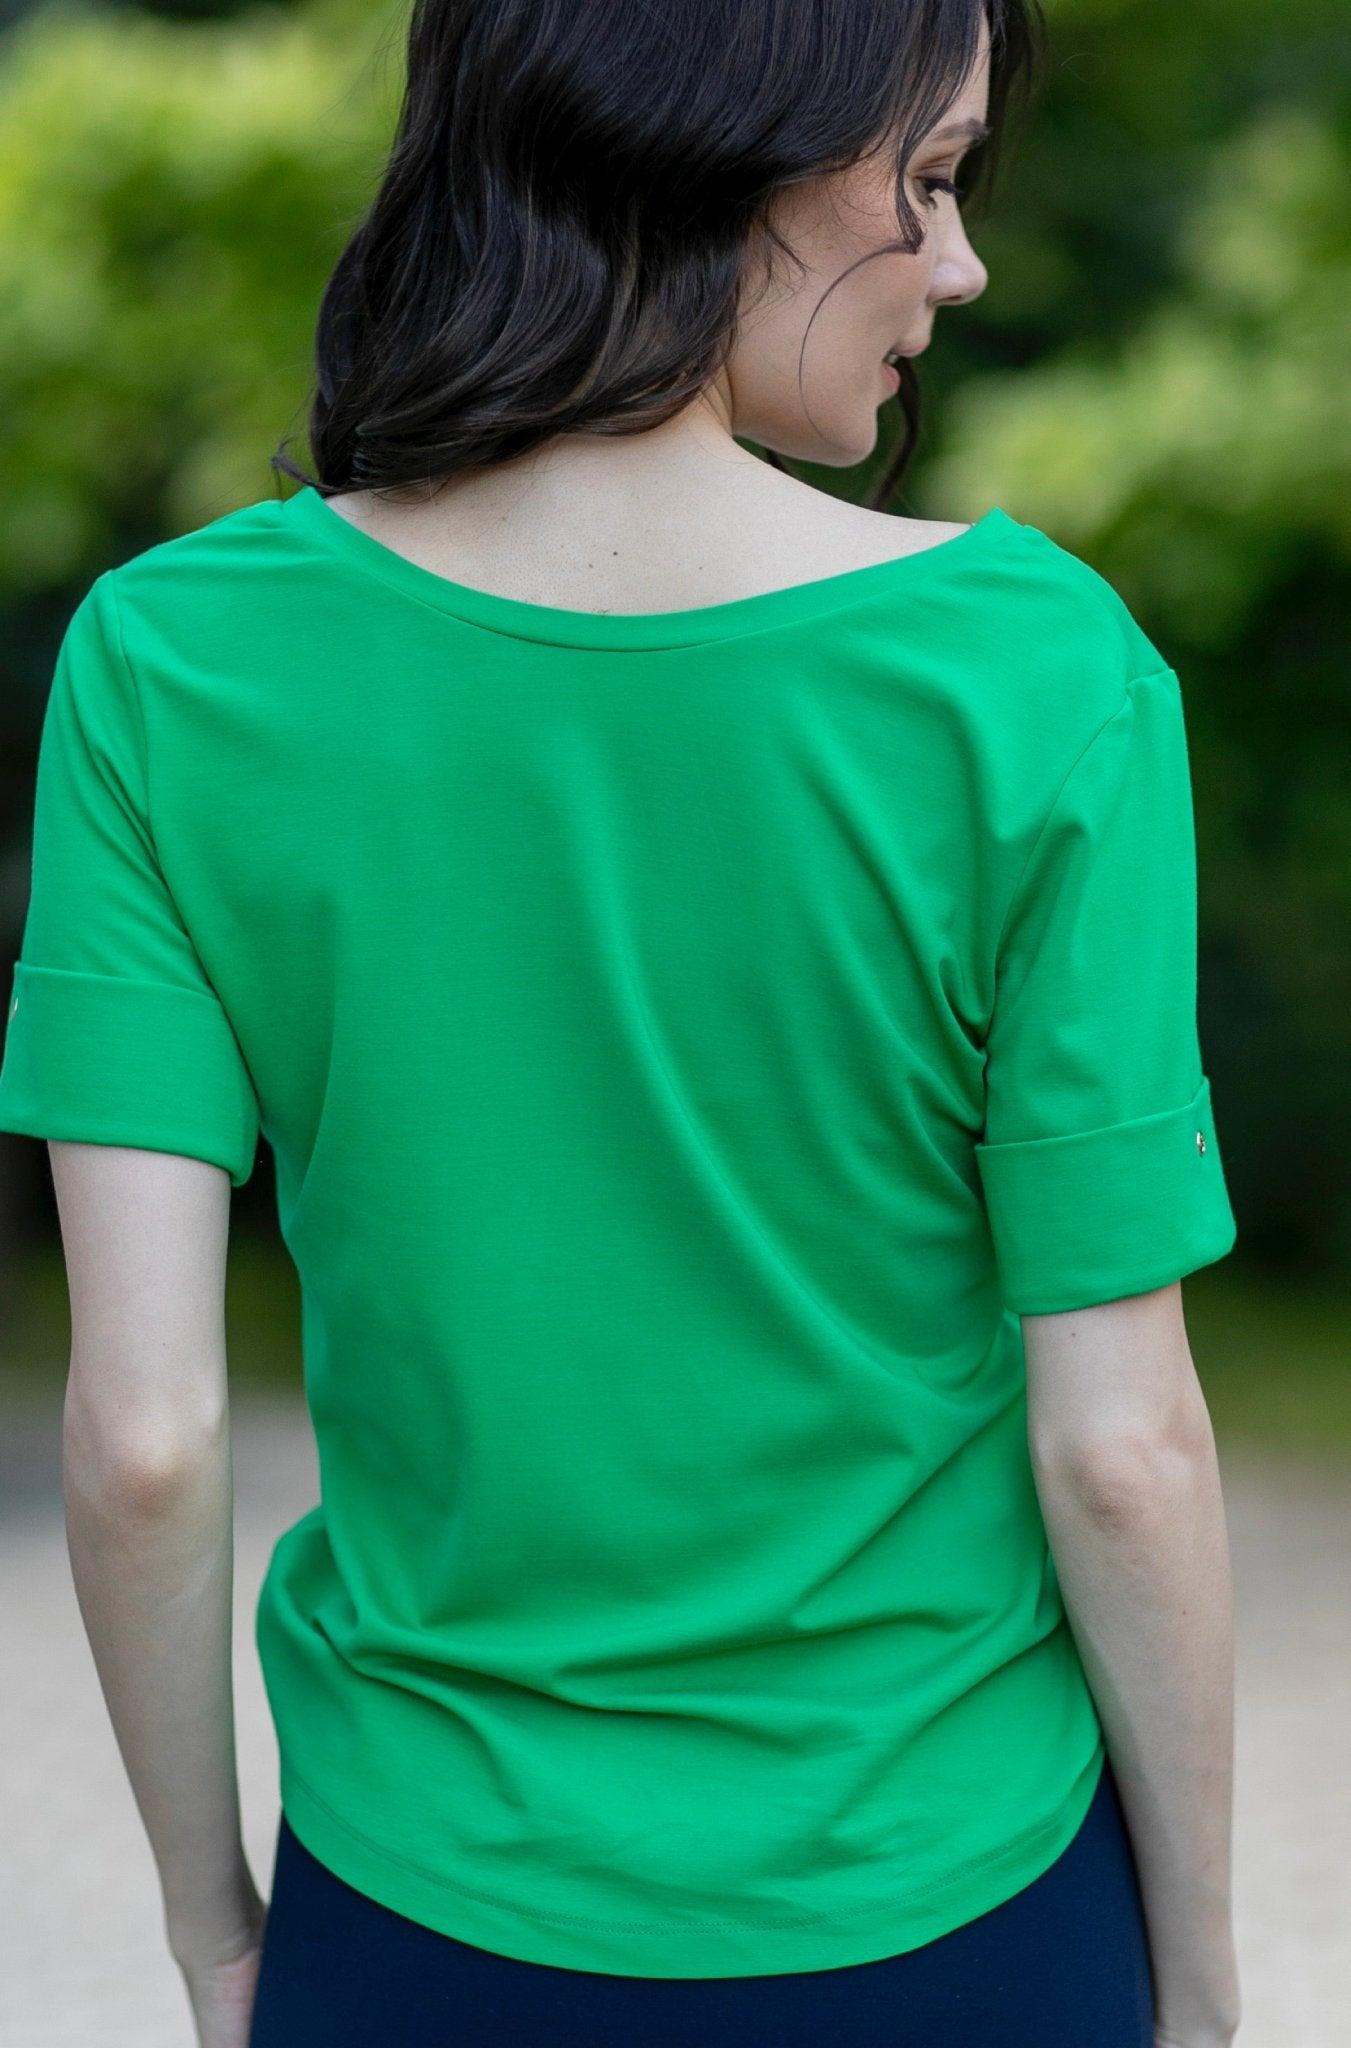 ibiza-top-ketoldalt-hordhato-smaragdzold-essential-wardrobe-kapszularuhatar-webshop